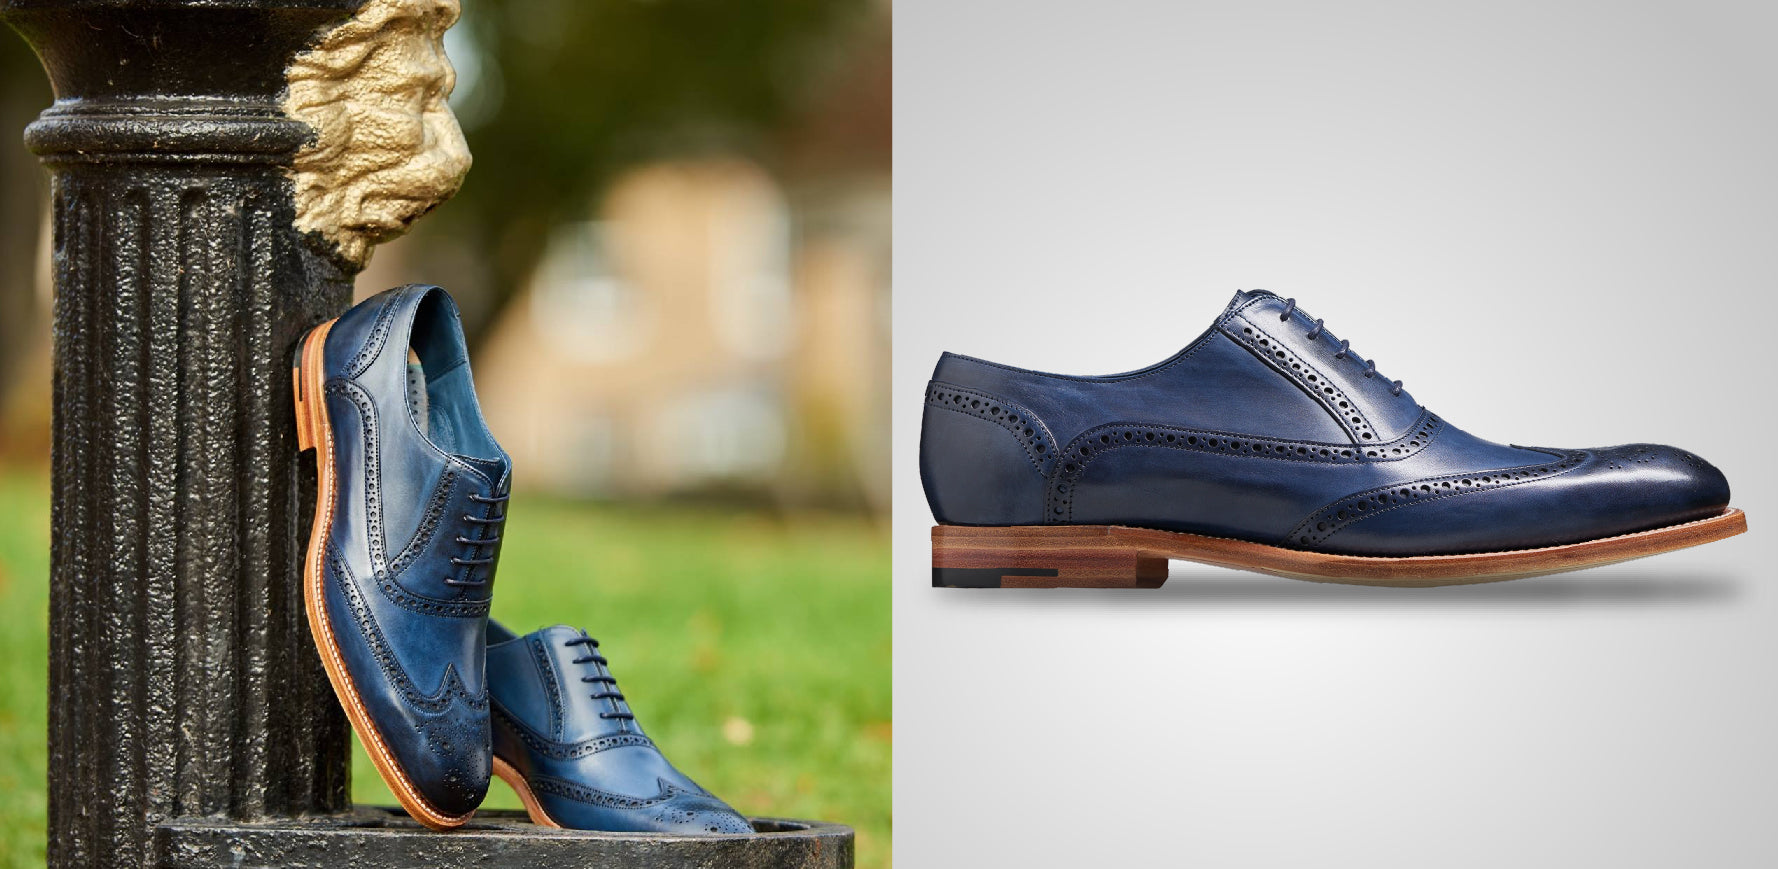 Valiant - Men's Handmade Leather Oxford Brogue Dress Shoe By Barker